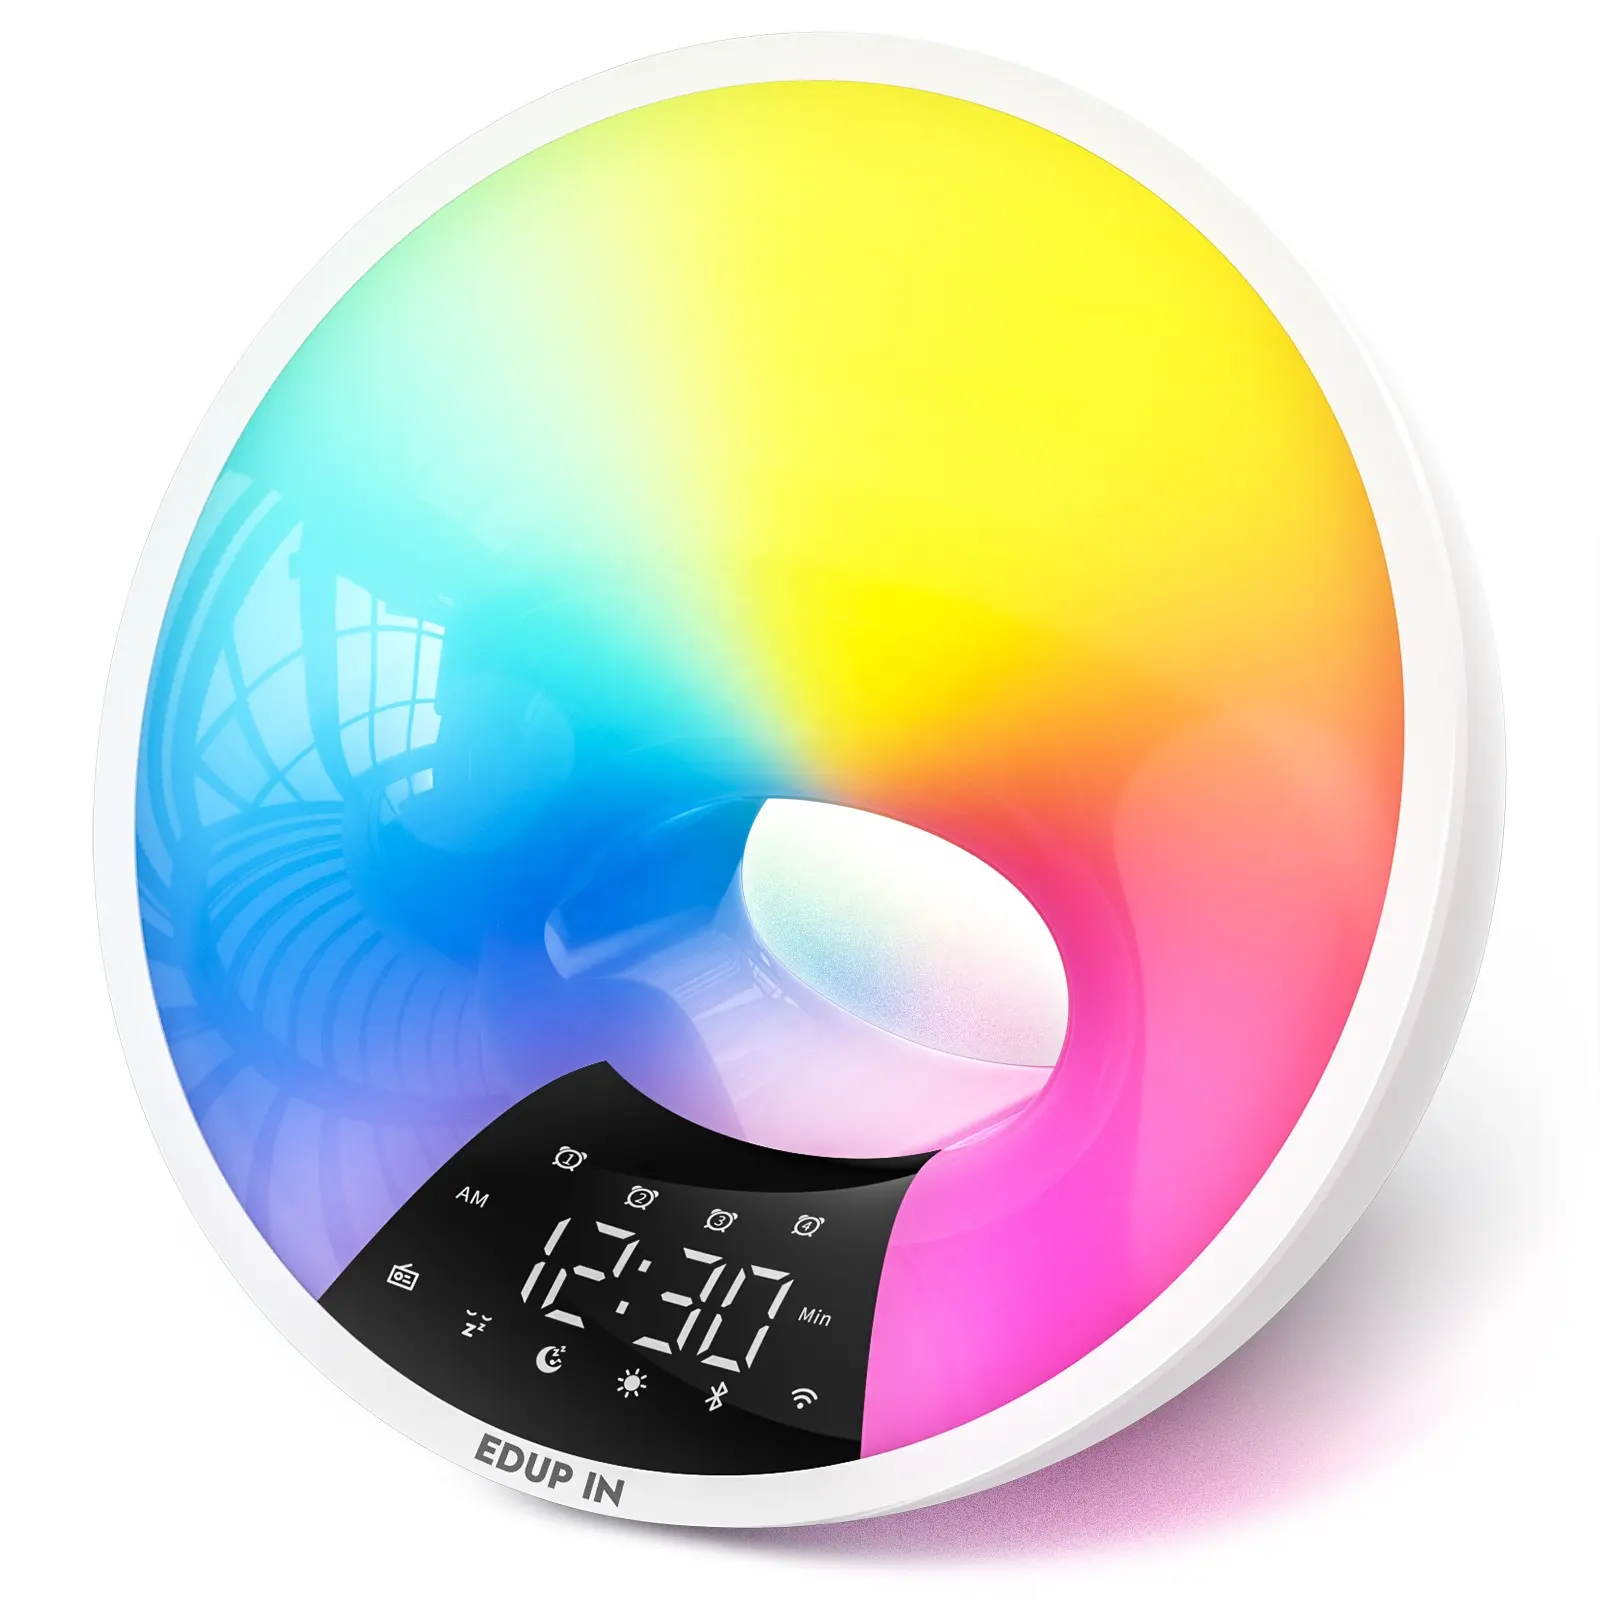 Biumart New Arrival Smart APP Alarm Clock White Noise Machine Simulate Sunrise and Sunset Colorful Wake Up Light